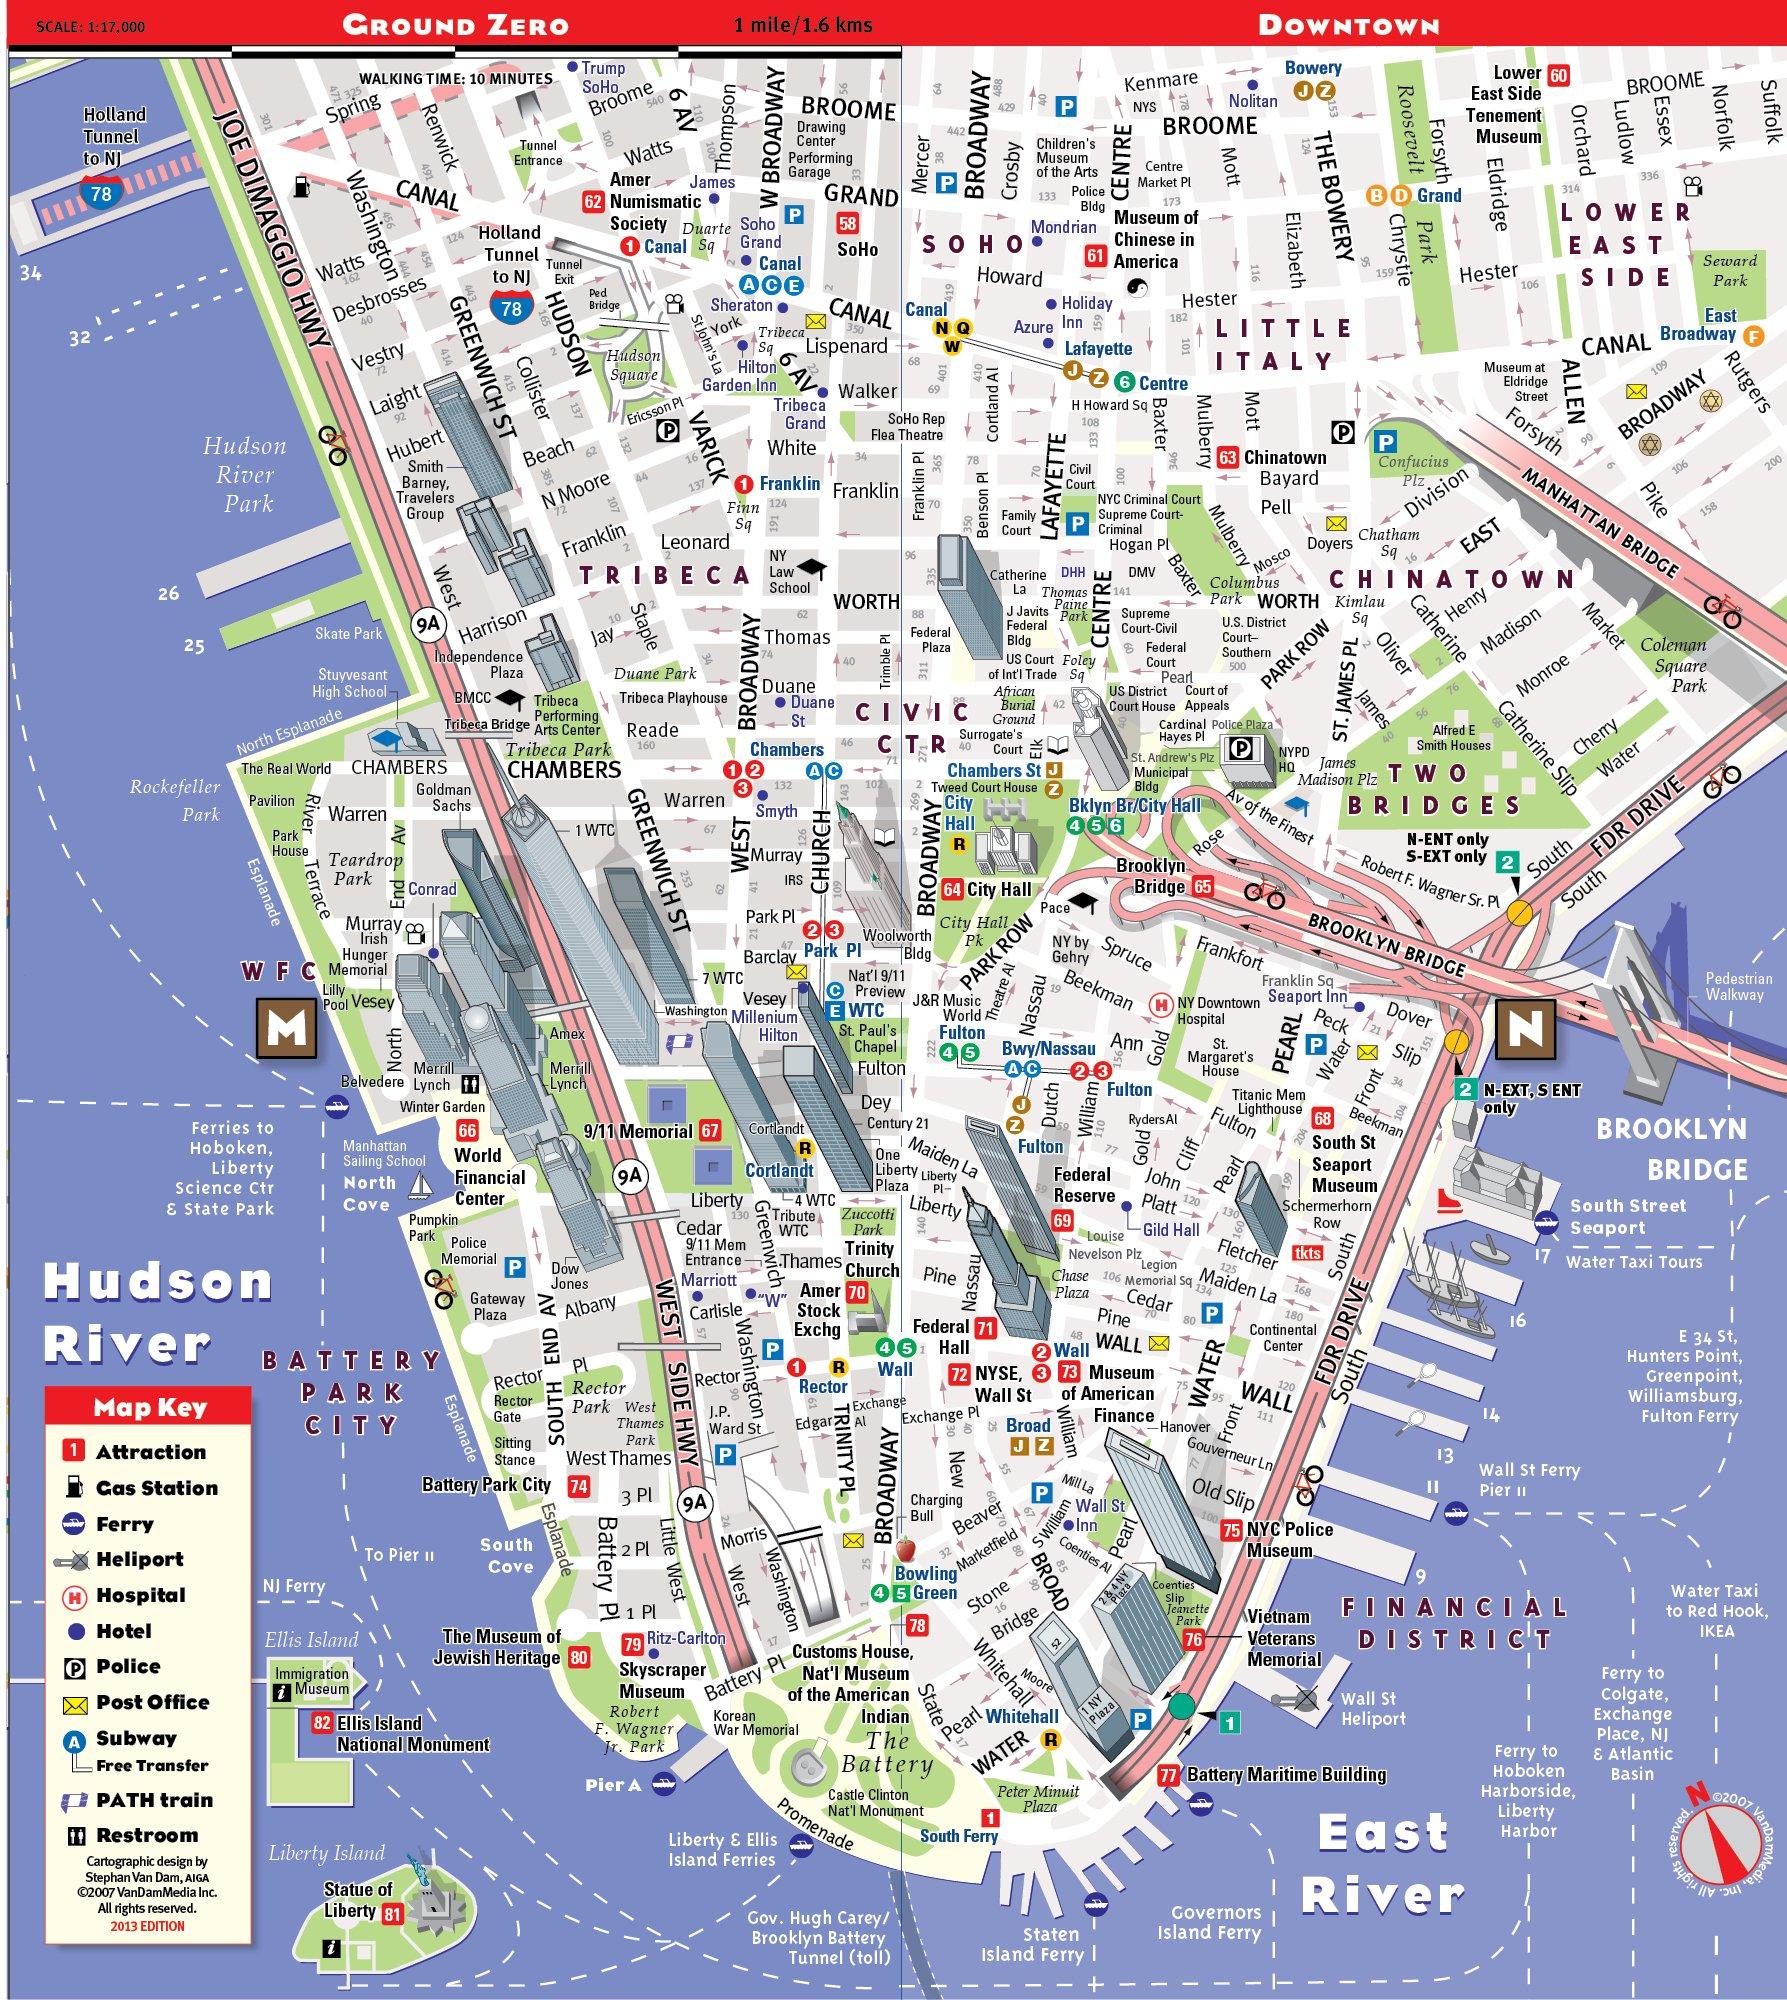 Map of Manhattan offline map and detailed map of Manhattan city